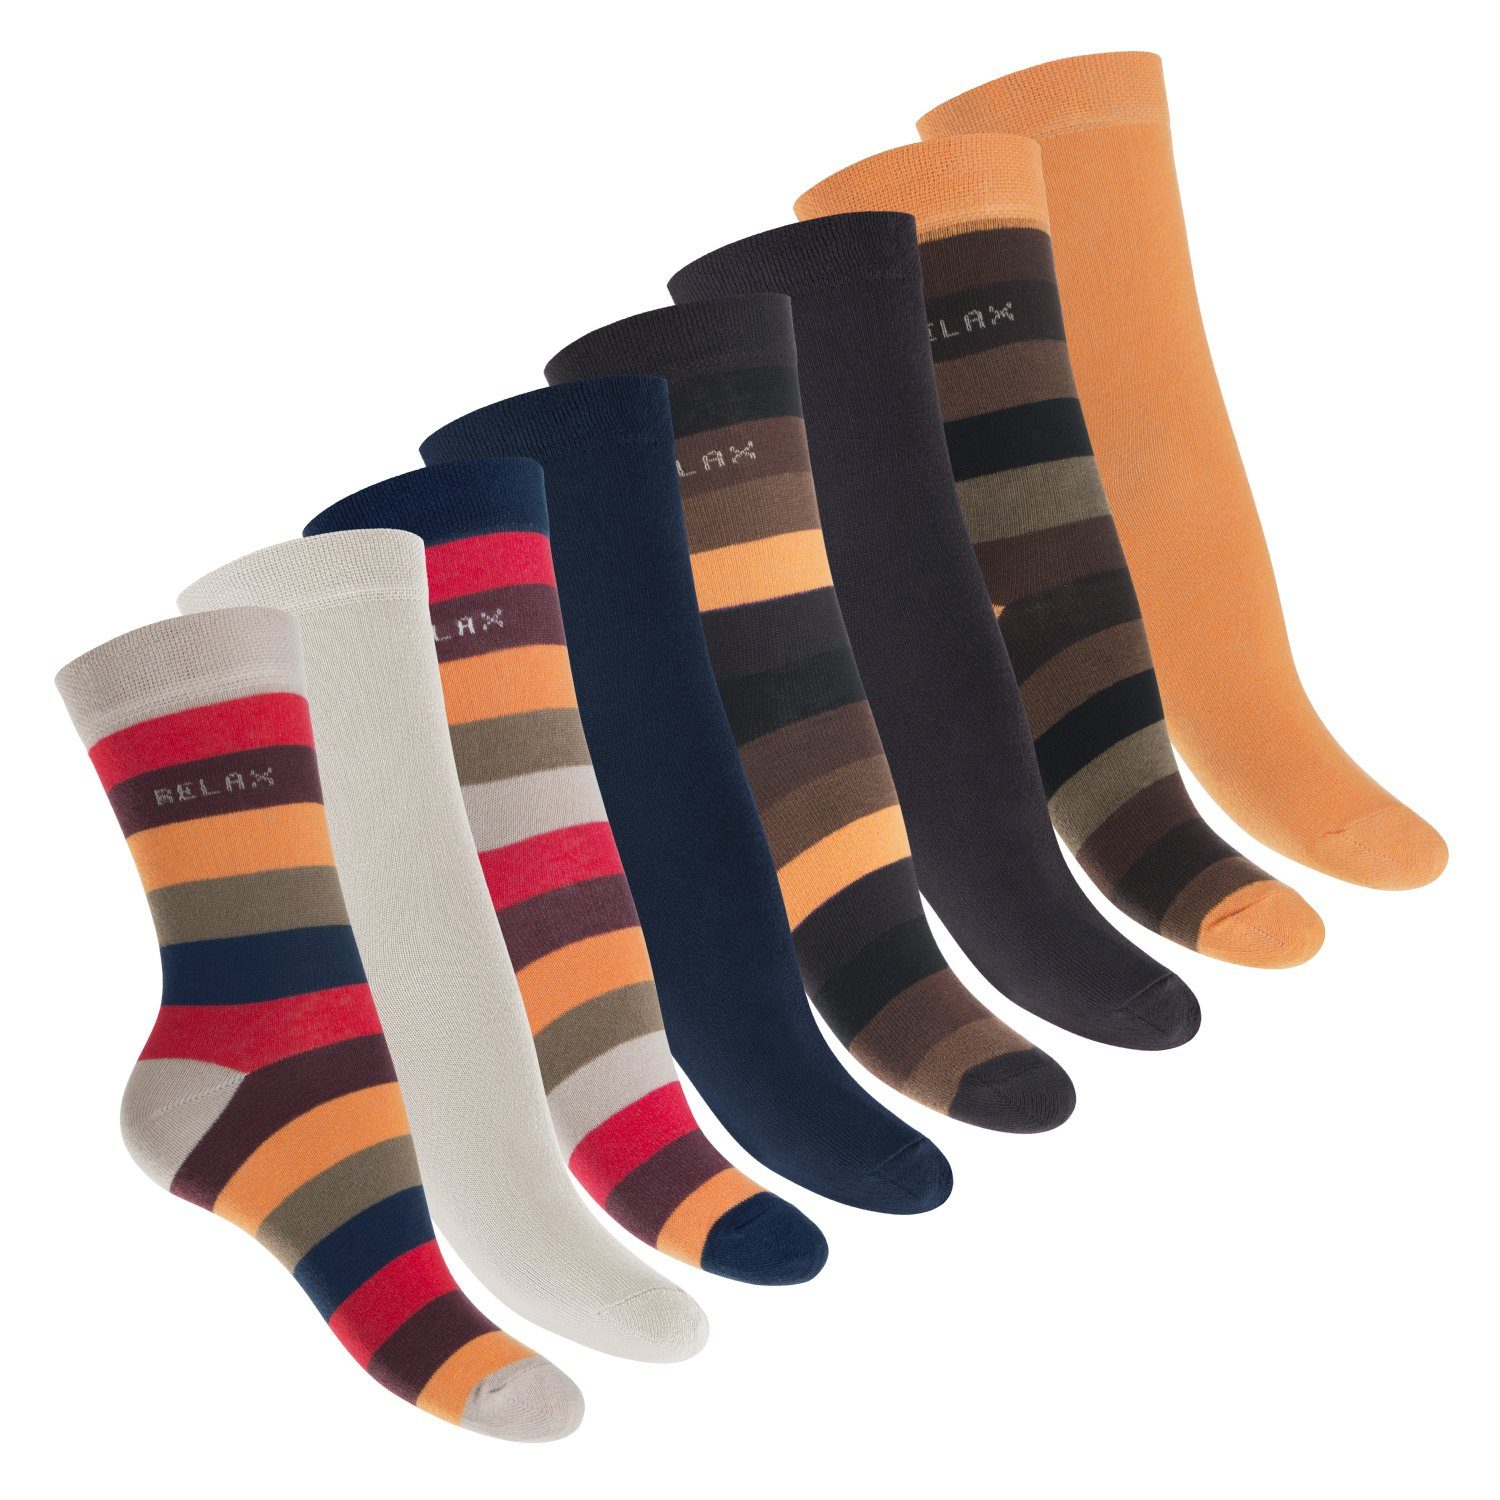 Multicolor Damen Socken Ringel-/Blockstreifen & mit Komfortbund (8 Basicsocken celodoro Paar)